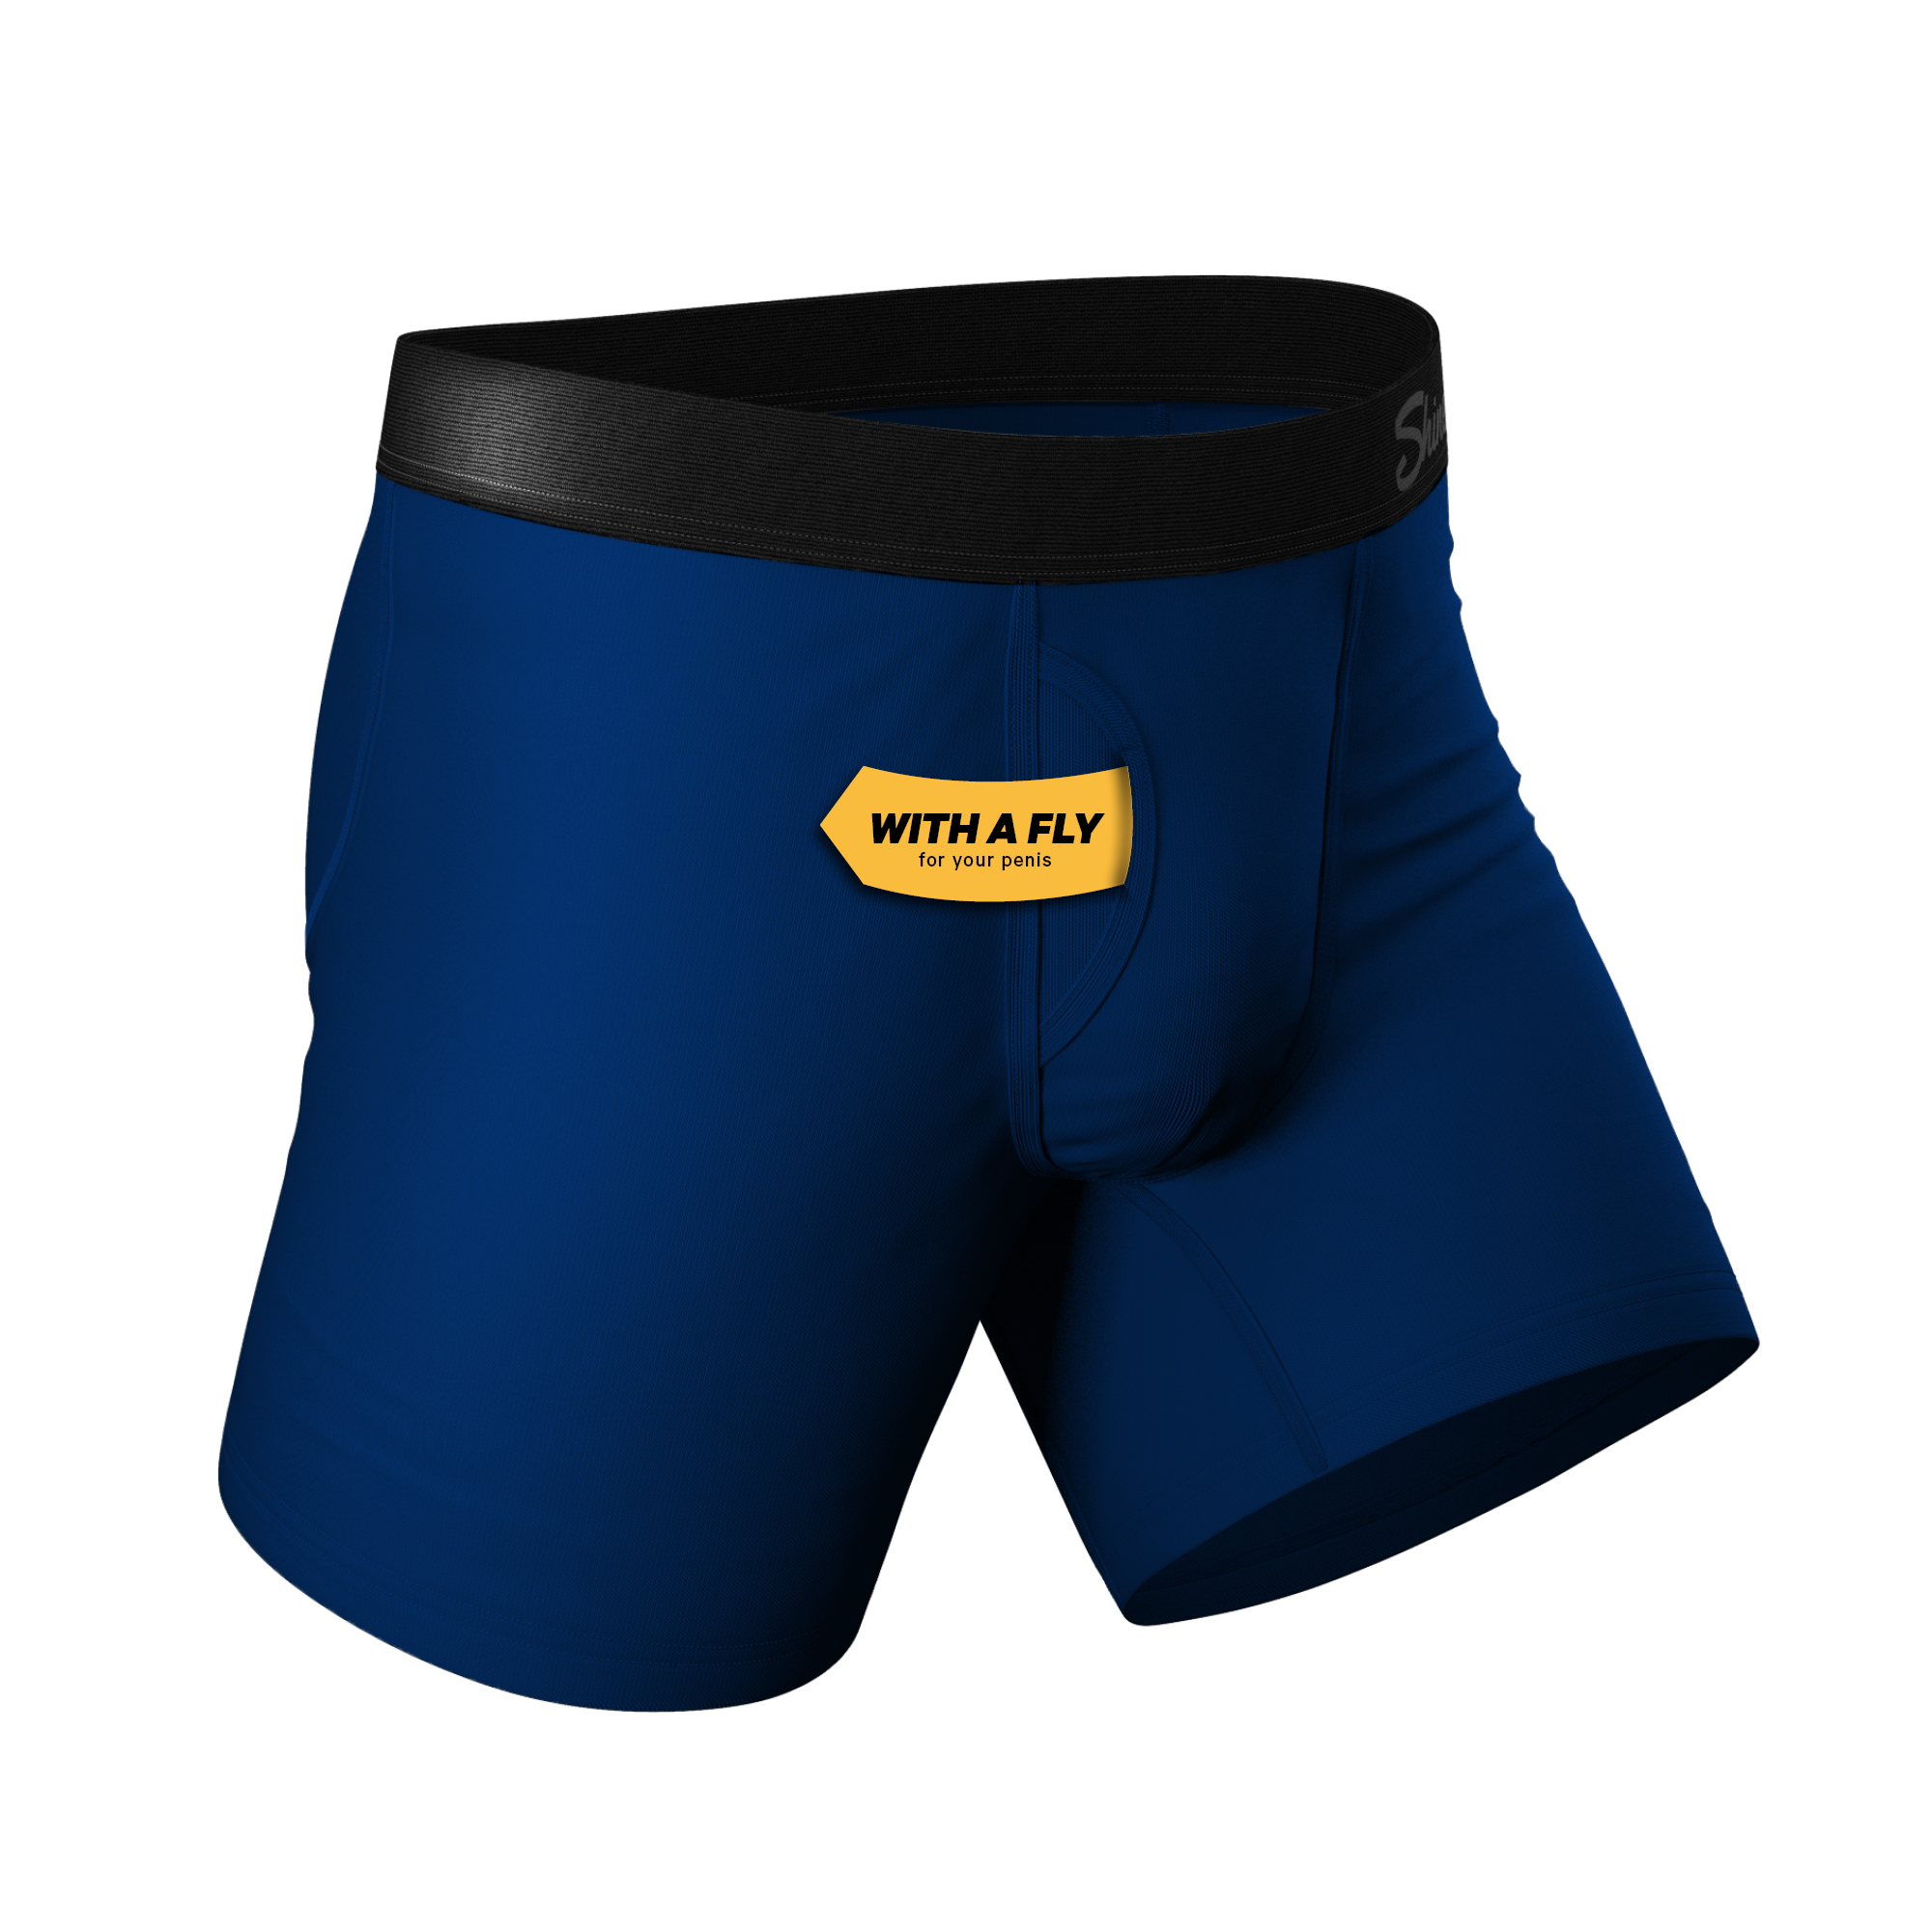 The Mascot // Ball Hammock® Pouch Underwear (L) - Shinesty - Touch